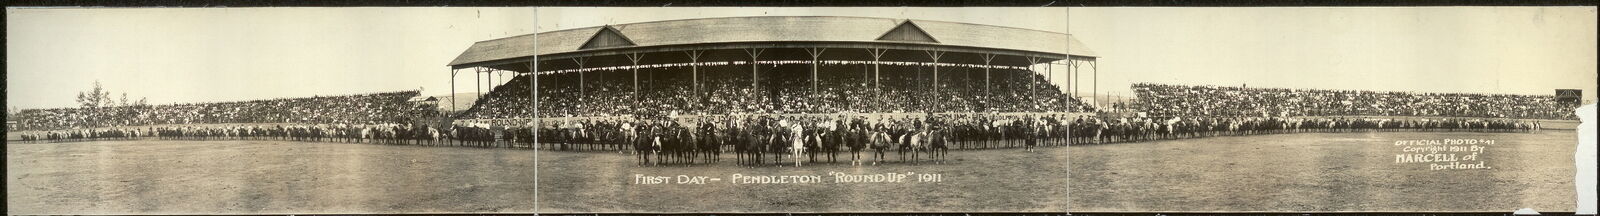 Photo:1911 Panoramic: First day,Pendleton Round Up,Oregon